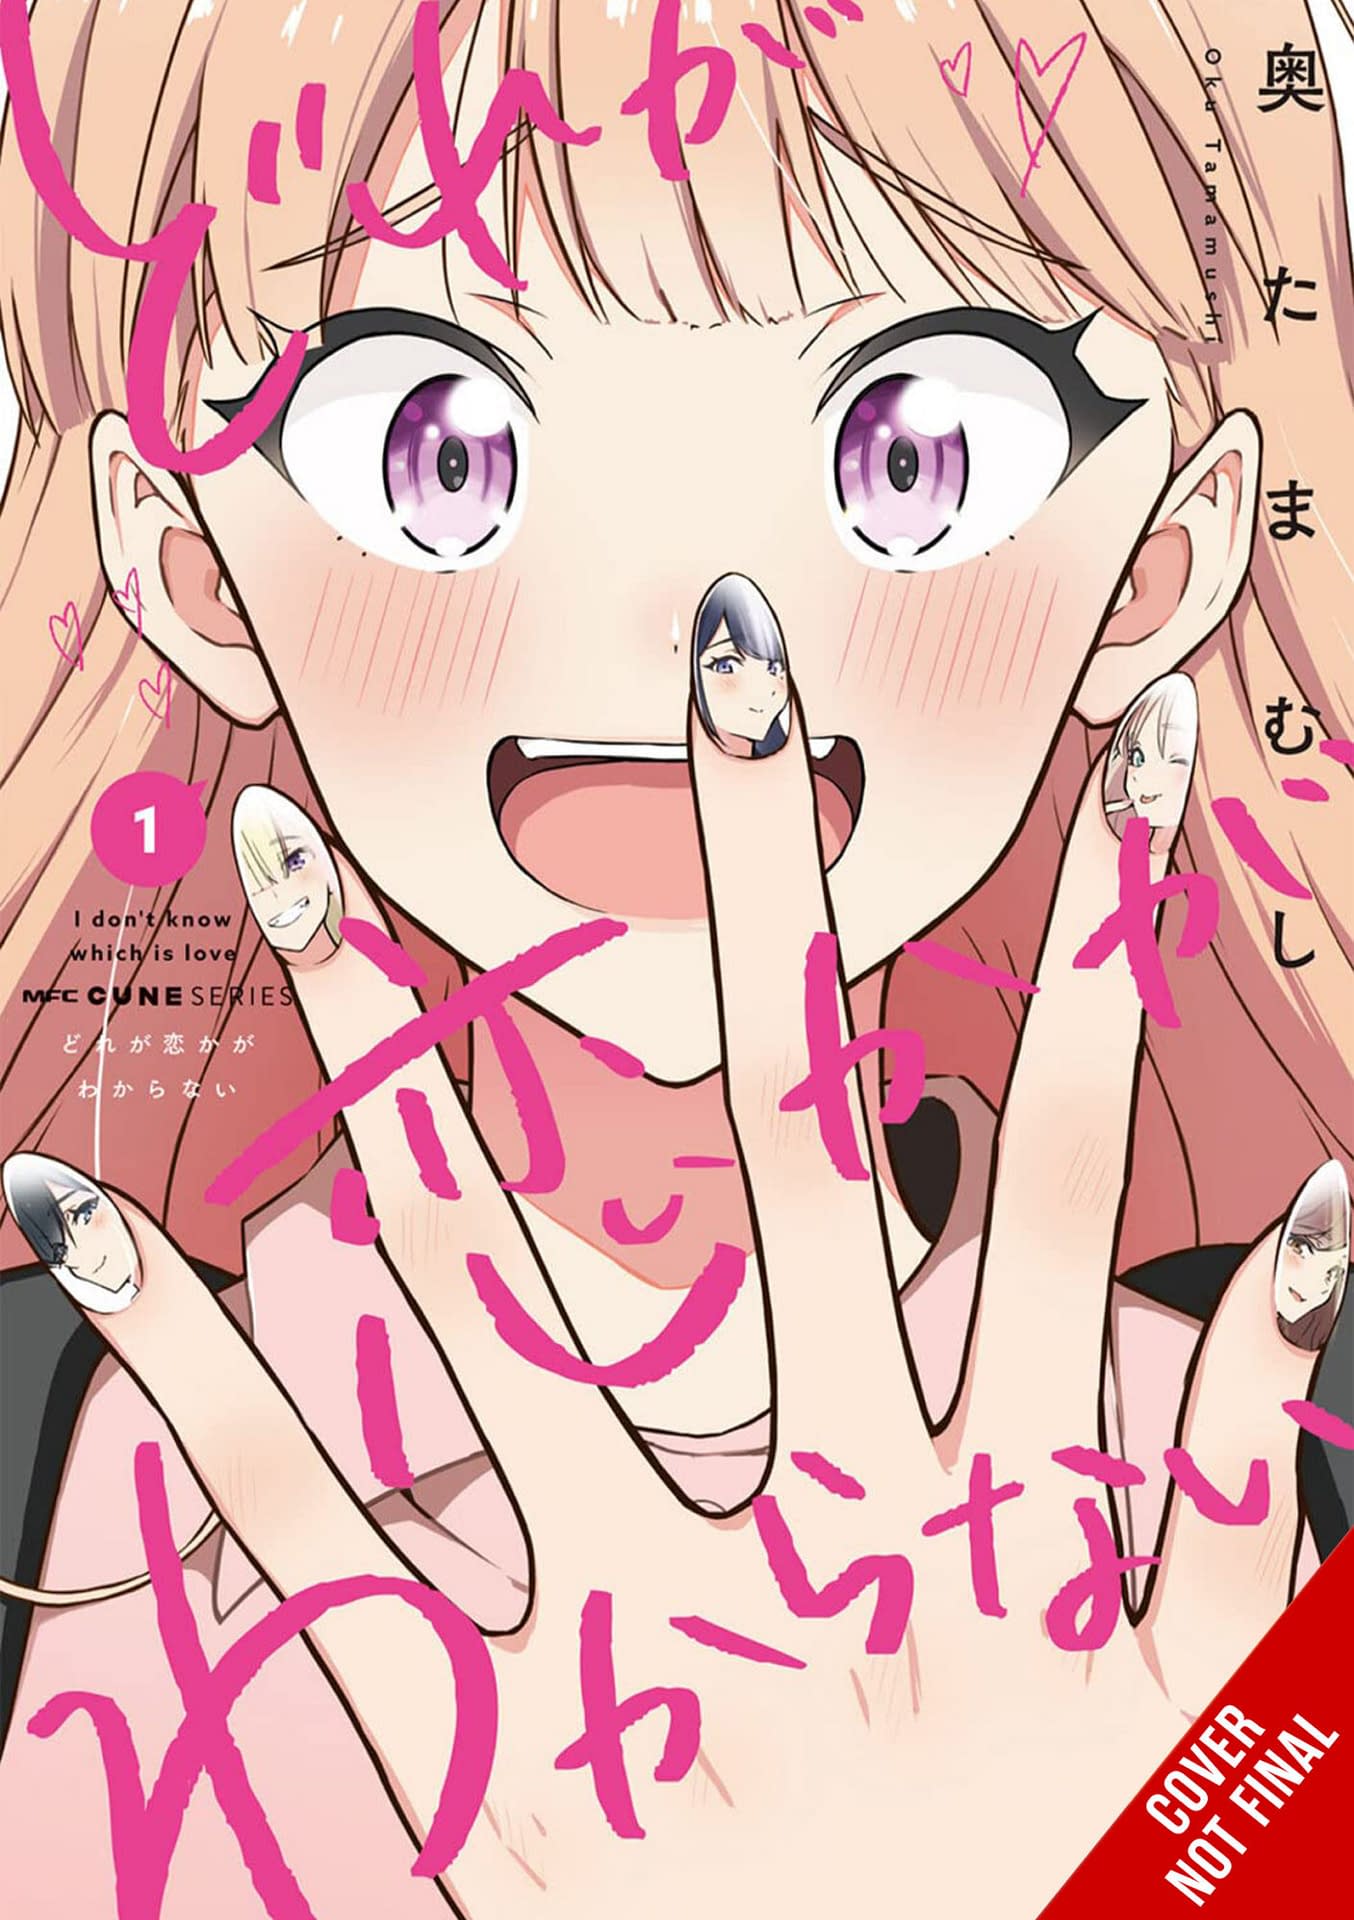 Val X Love English Manga Vol 1-3,5-12 Graphic Novel NEW Yen Press